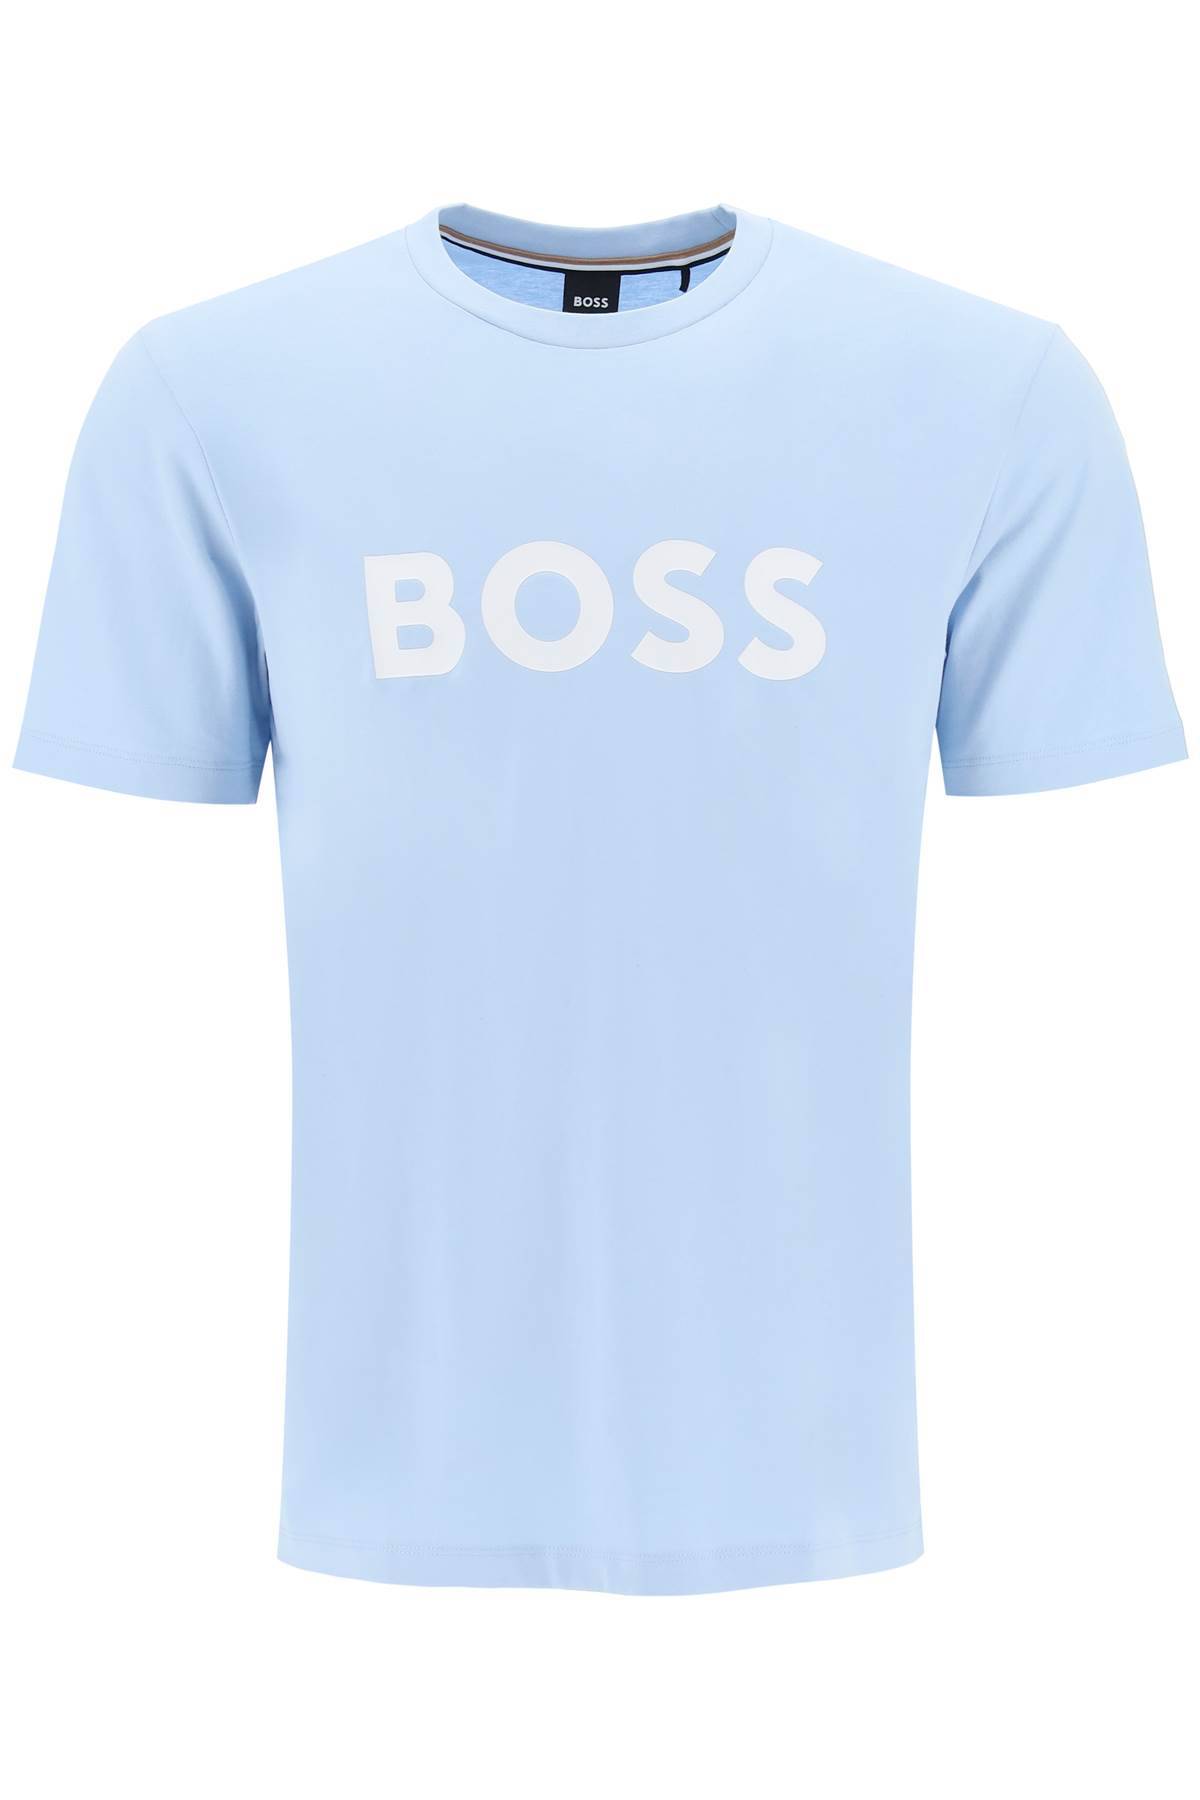 BOSS BOSS tiburt 354 logo print t-shirt